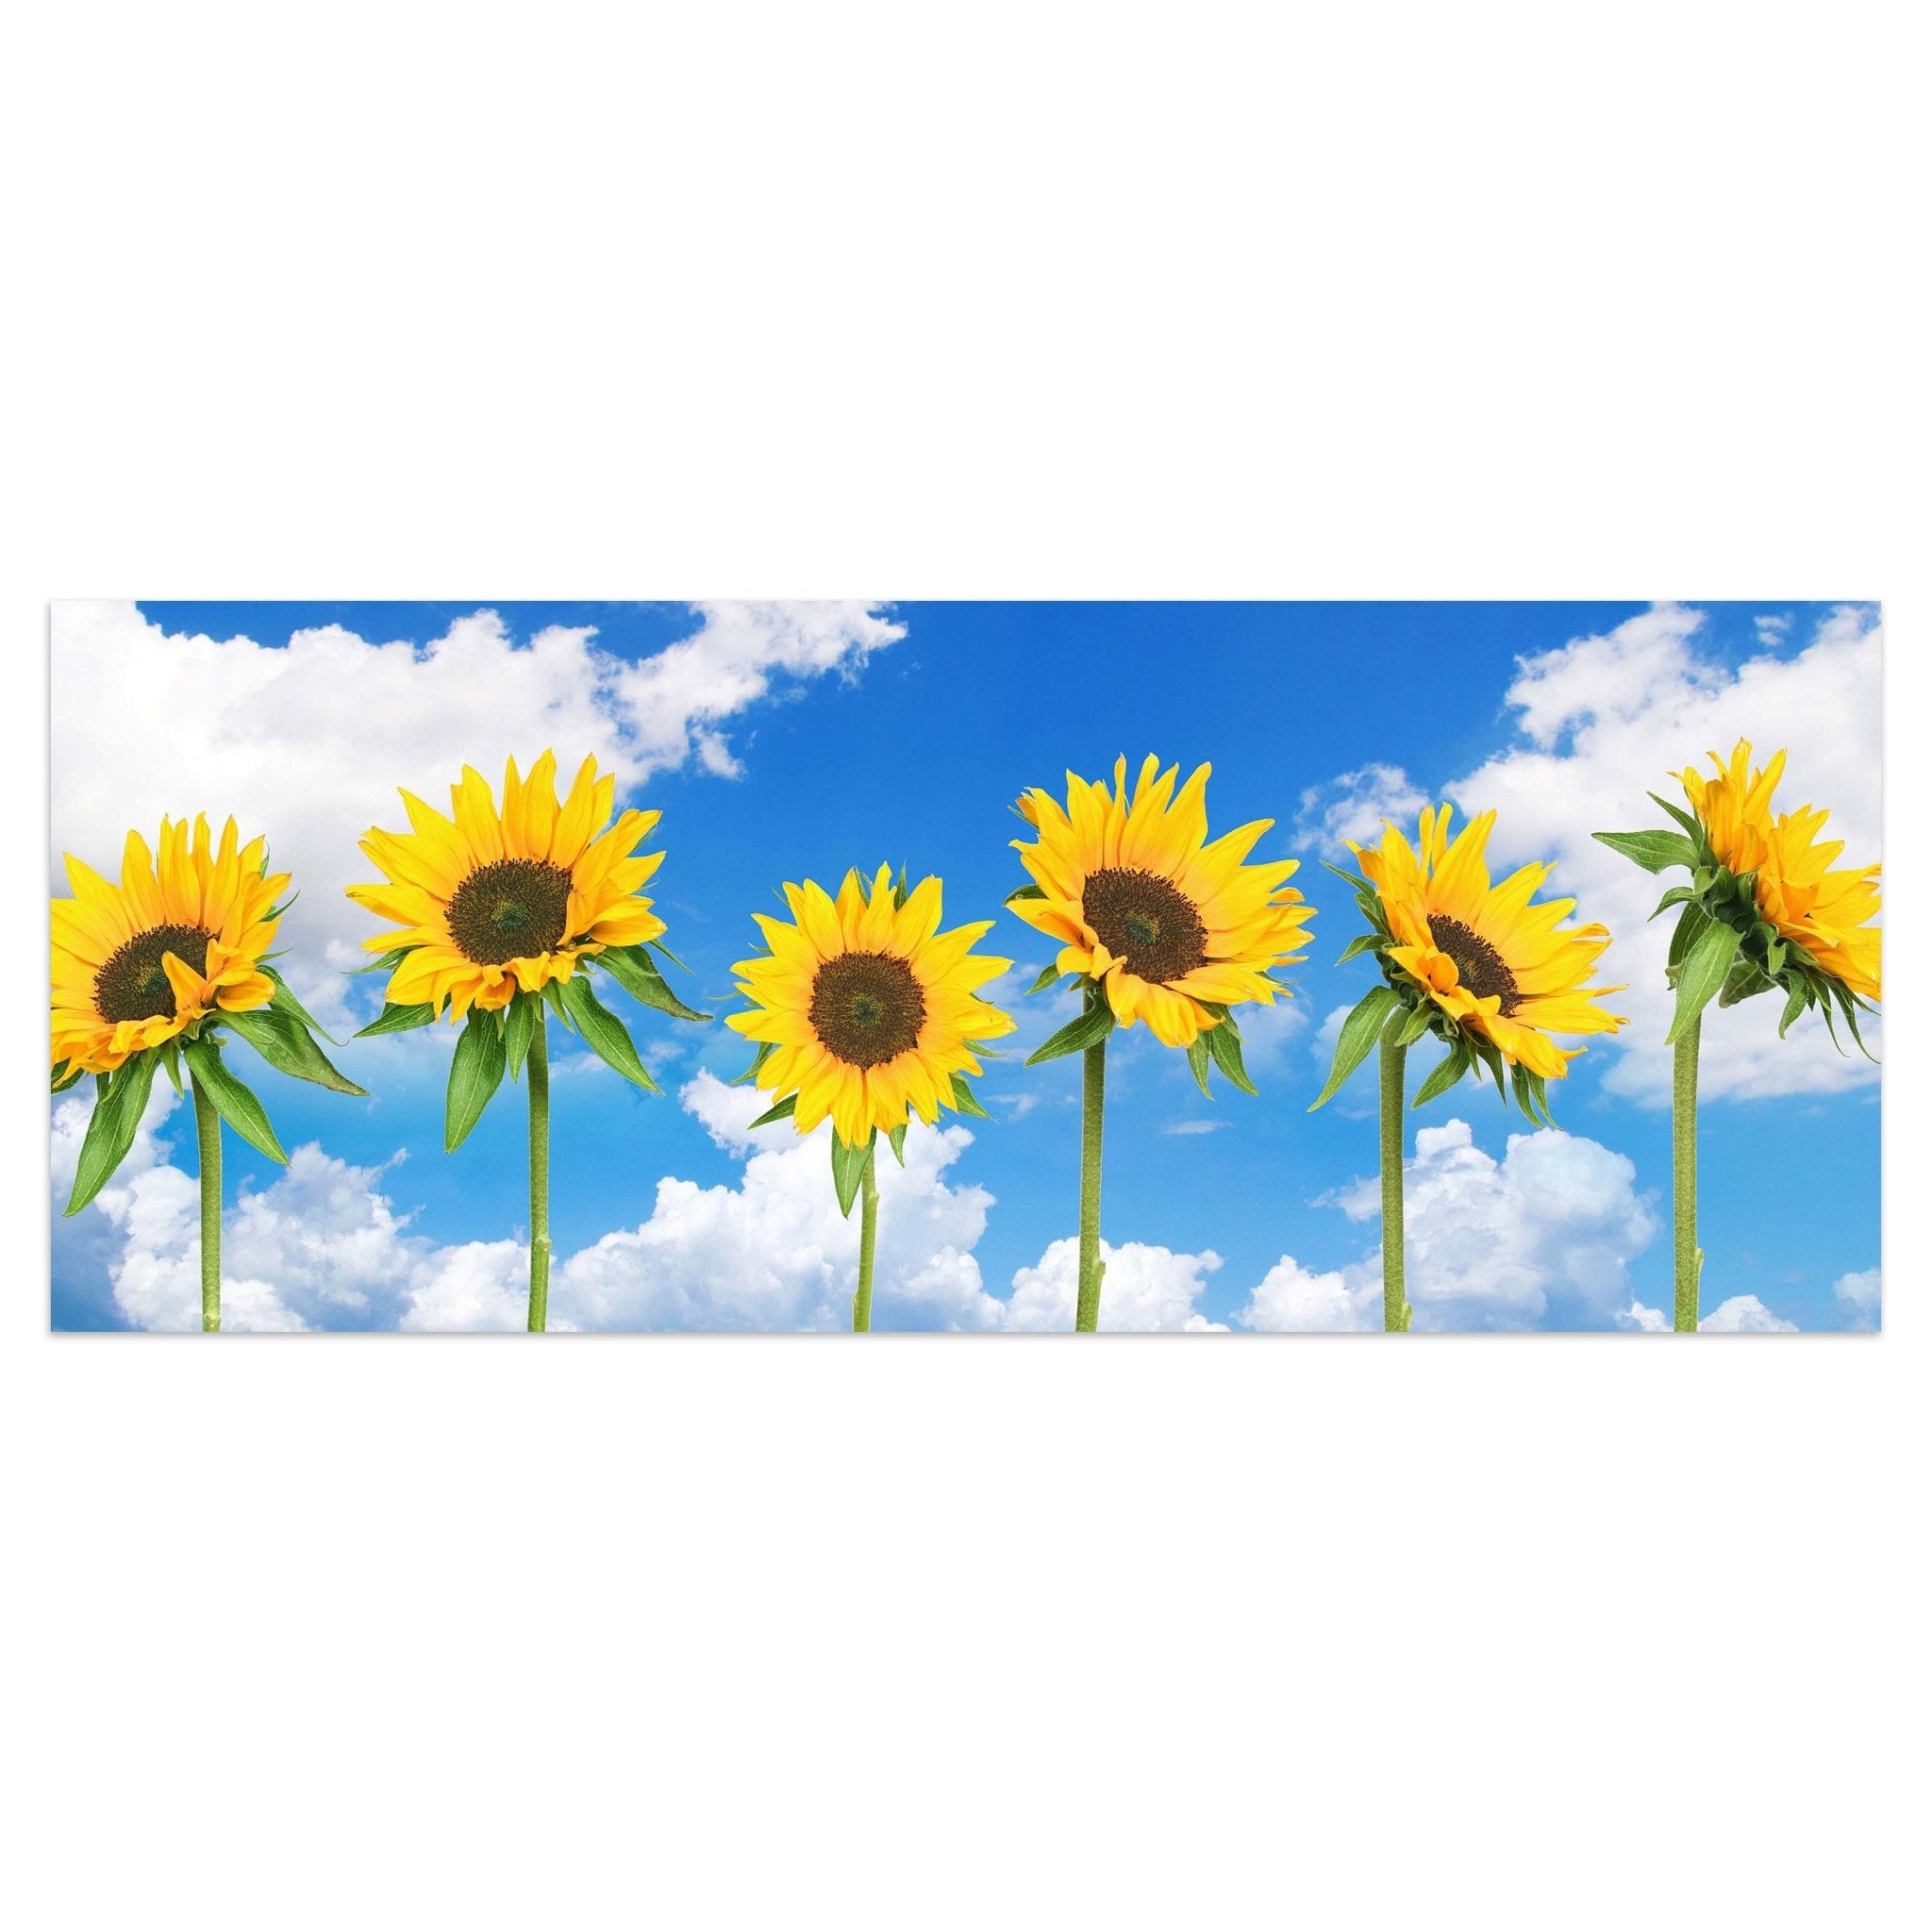 Leinwandbild Sonnenblumen M0705 kaufen - Bild 1